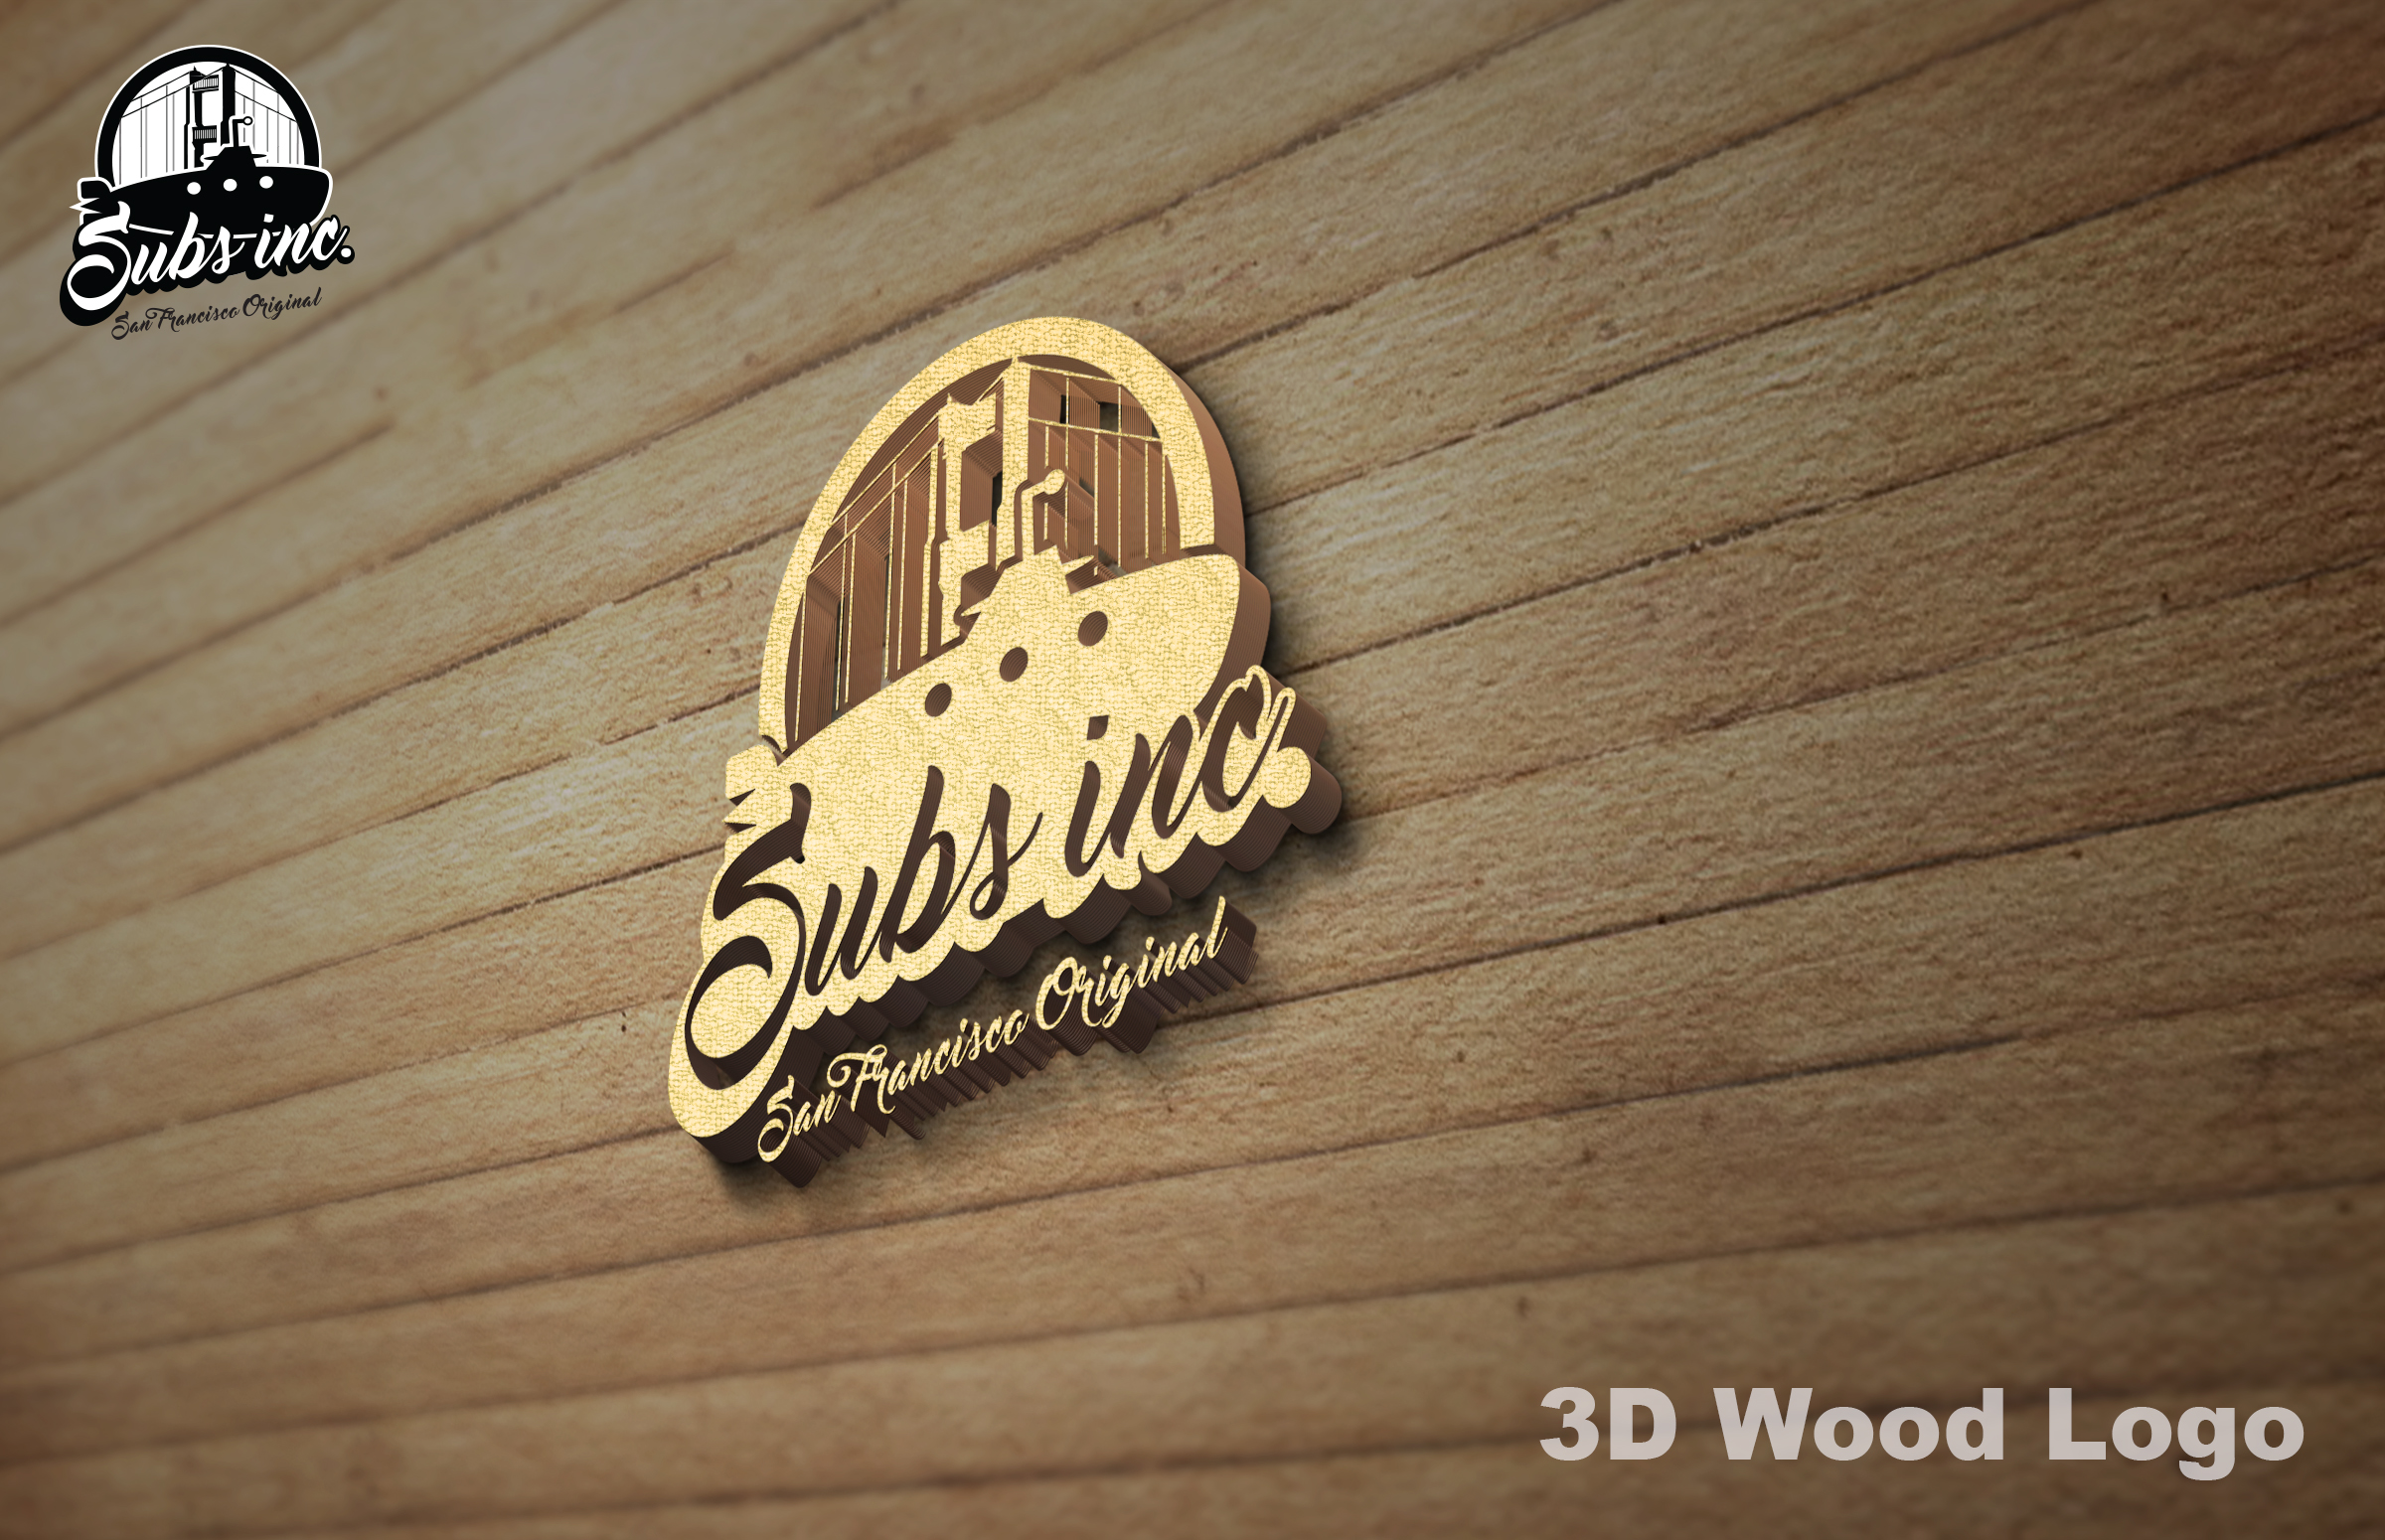 3d wood logo mockup.jpg